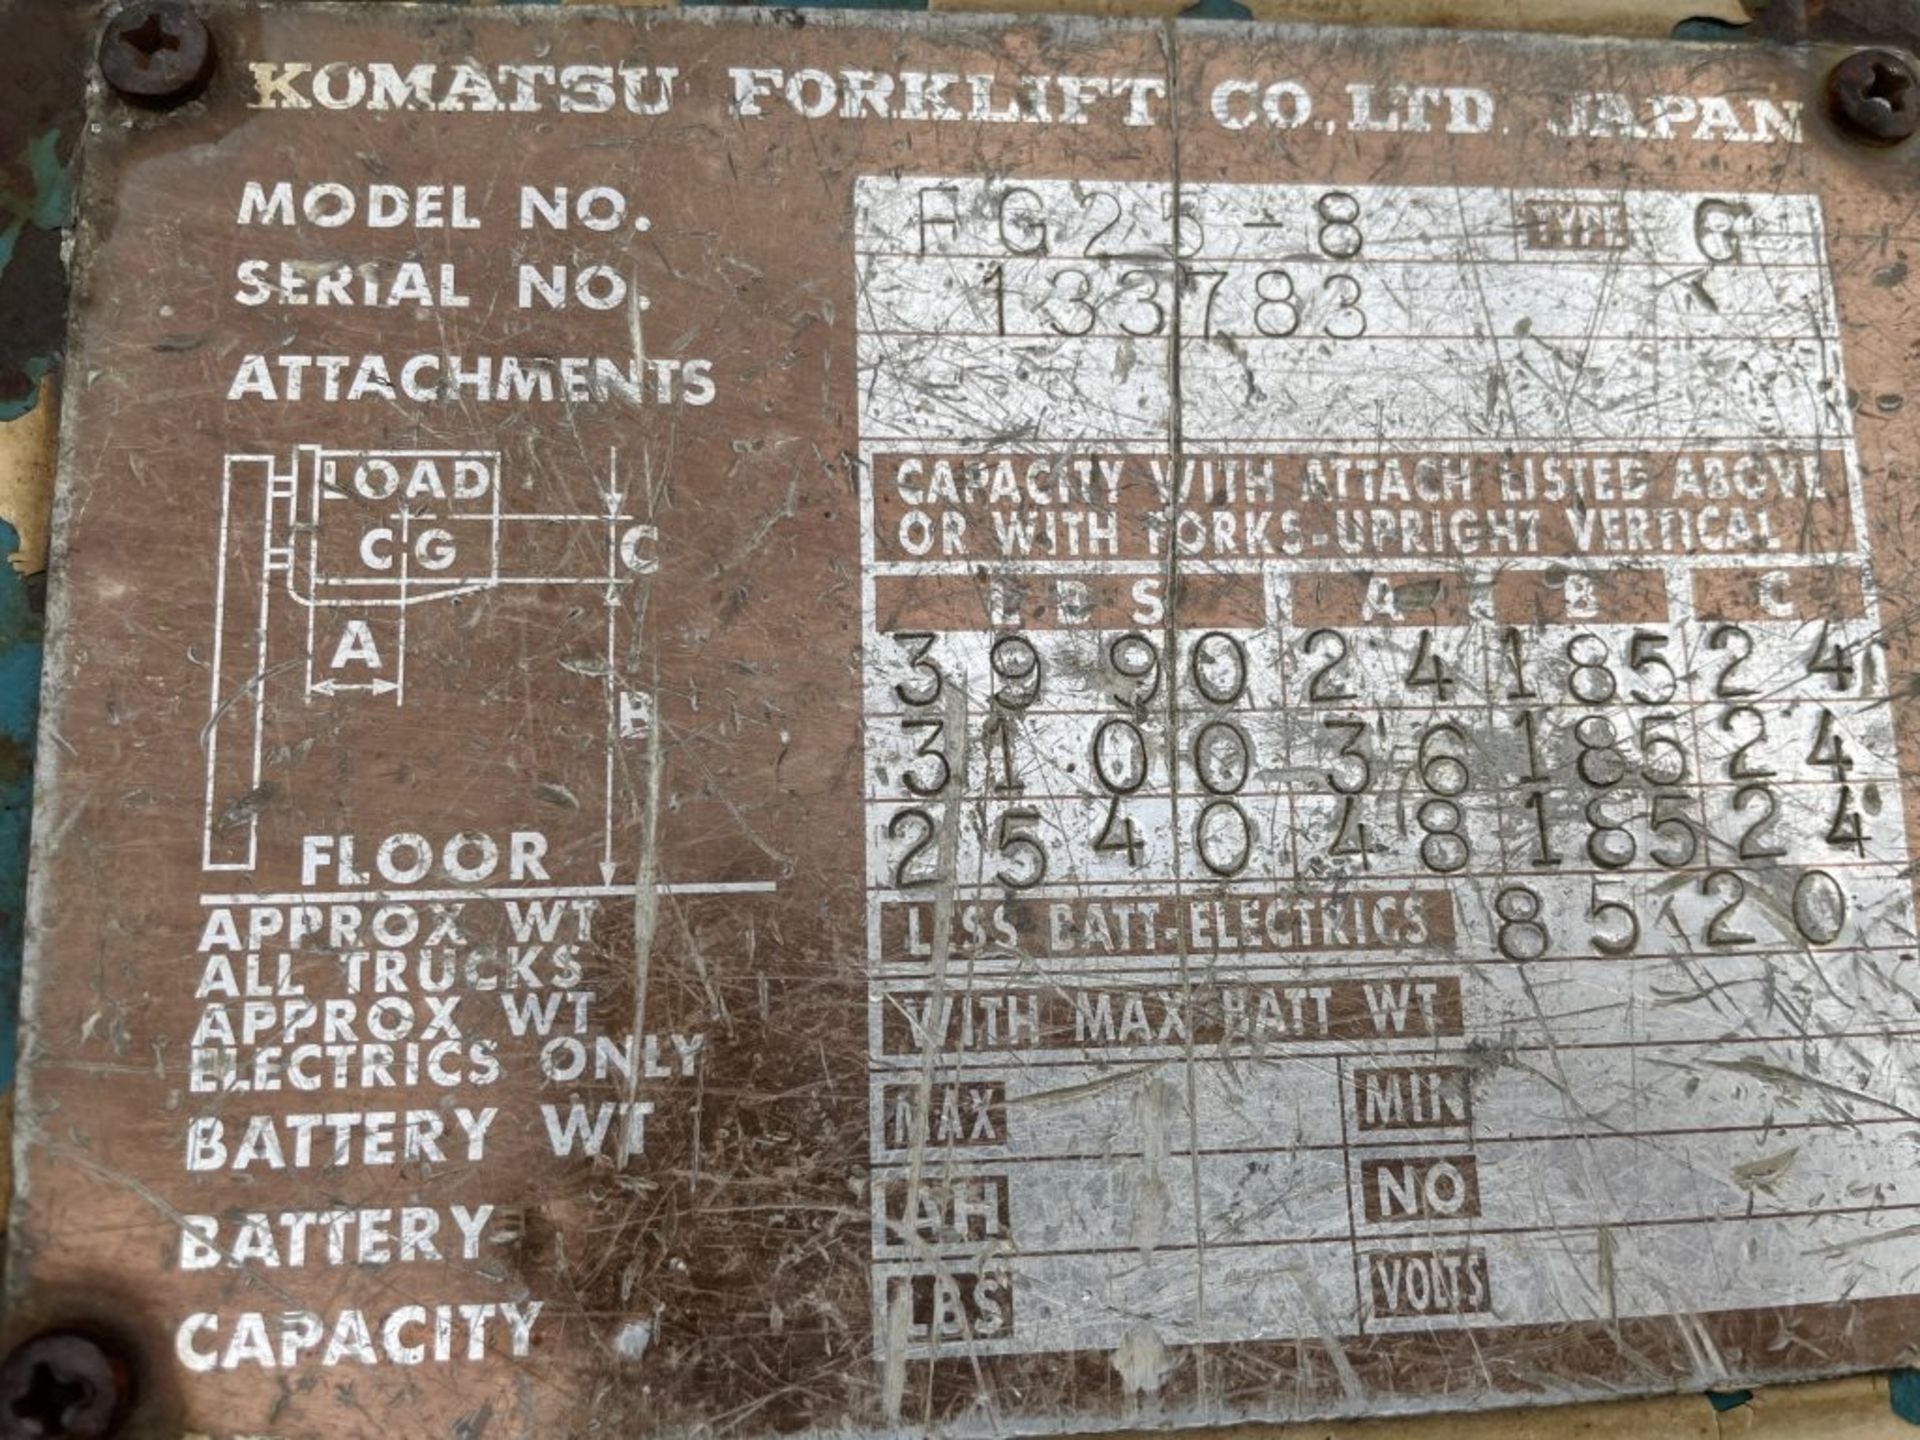 Komatsu FG25 Forklift - Image 13 of 14